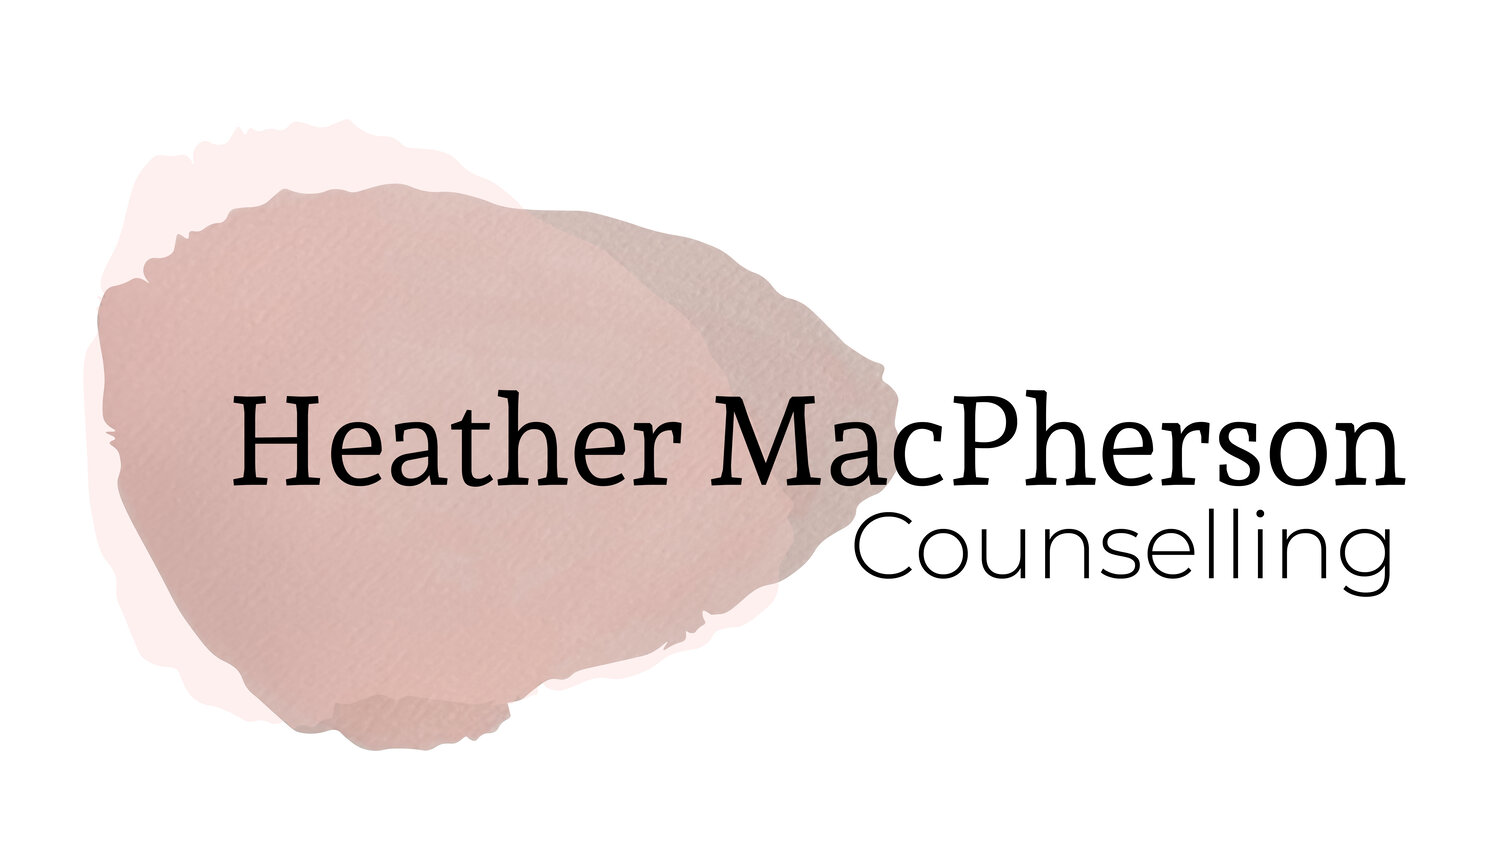 Heather MacPherson Counselling